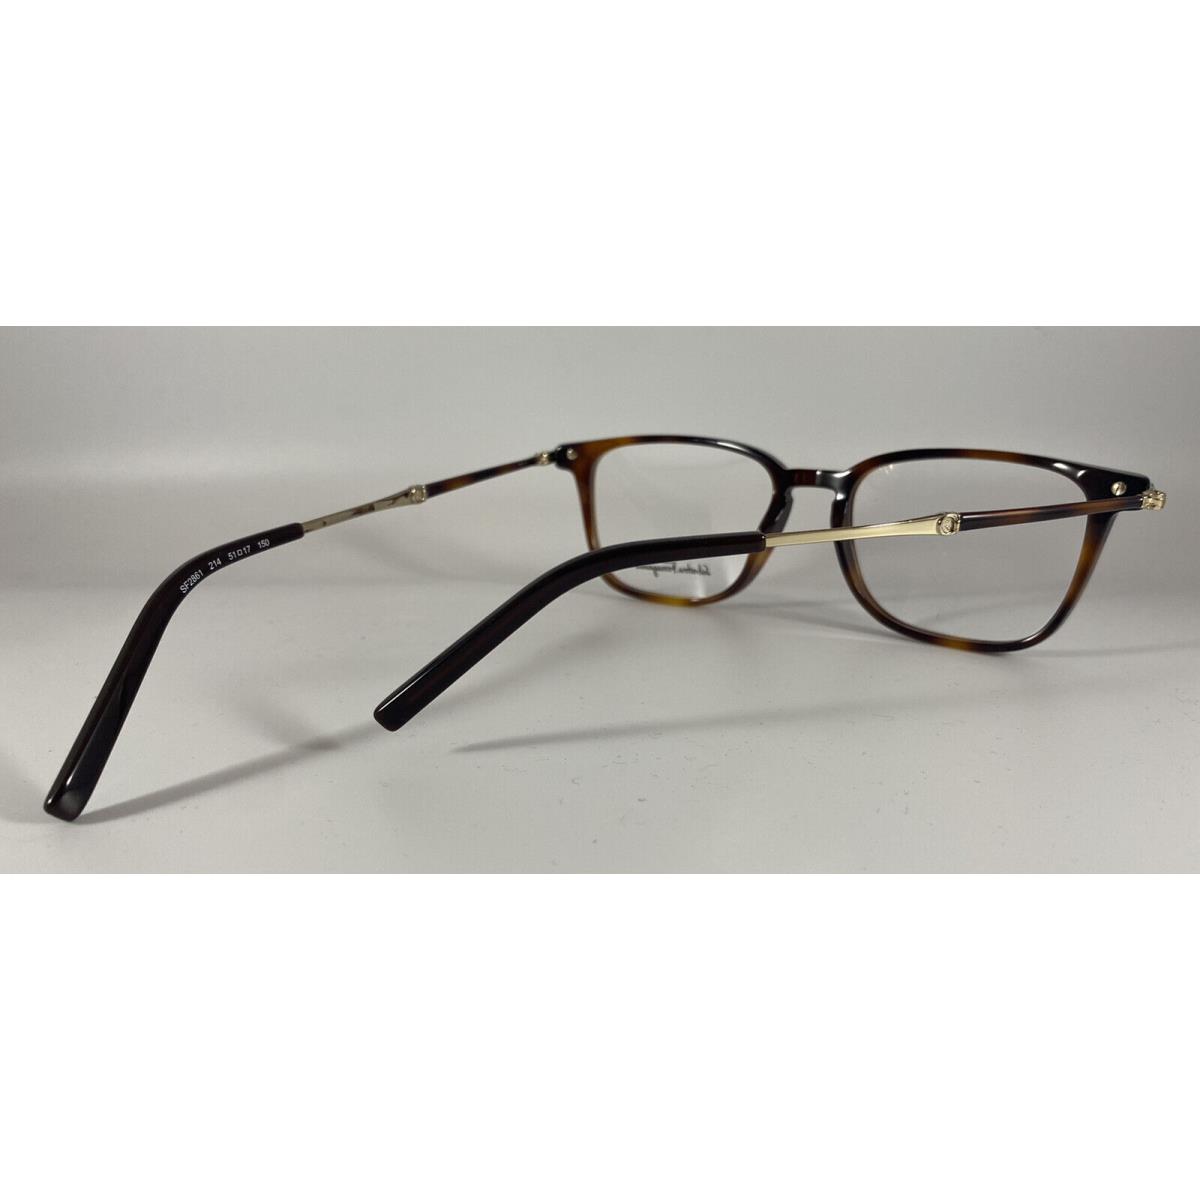 Salvatore Ferragamo eyeglasses  - 214 Frame 4